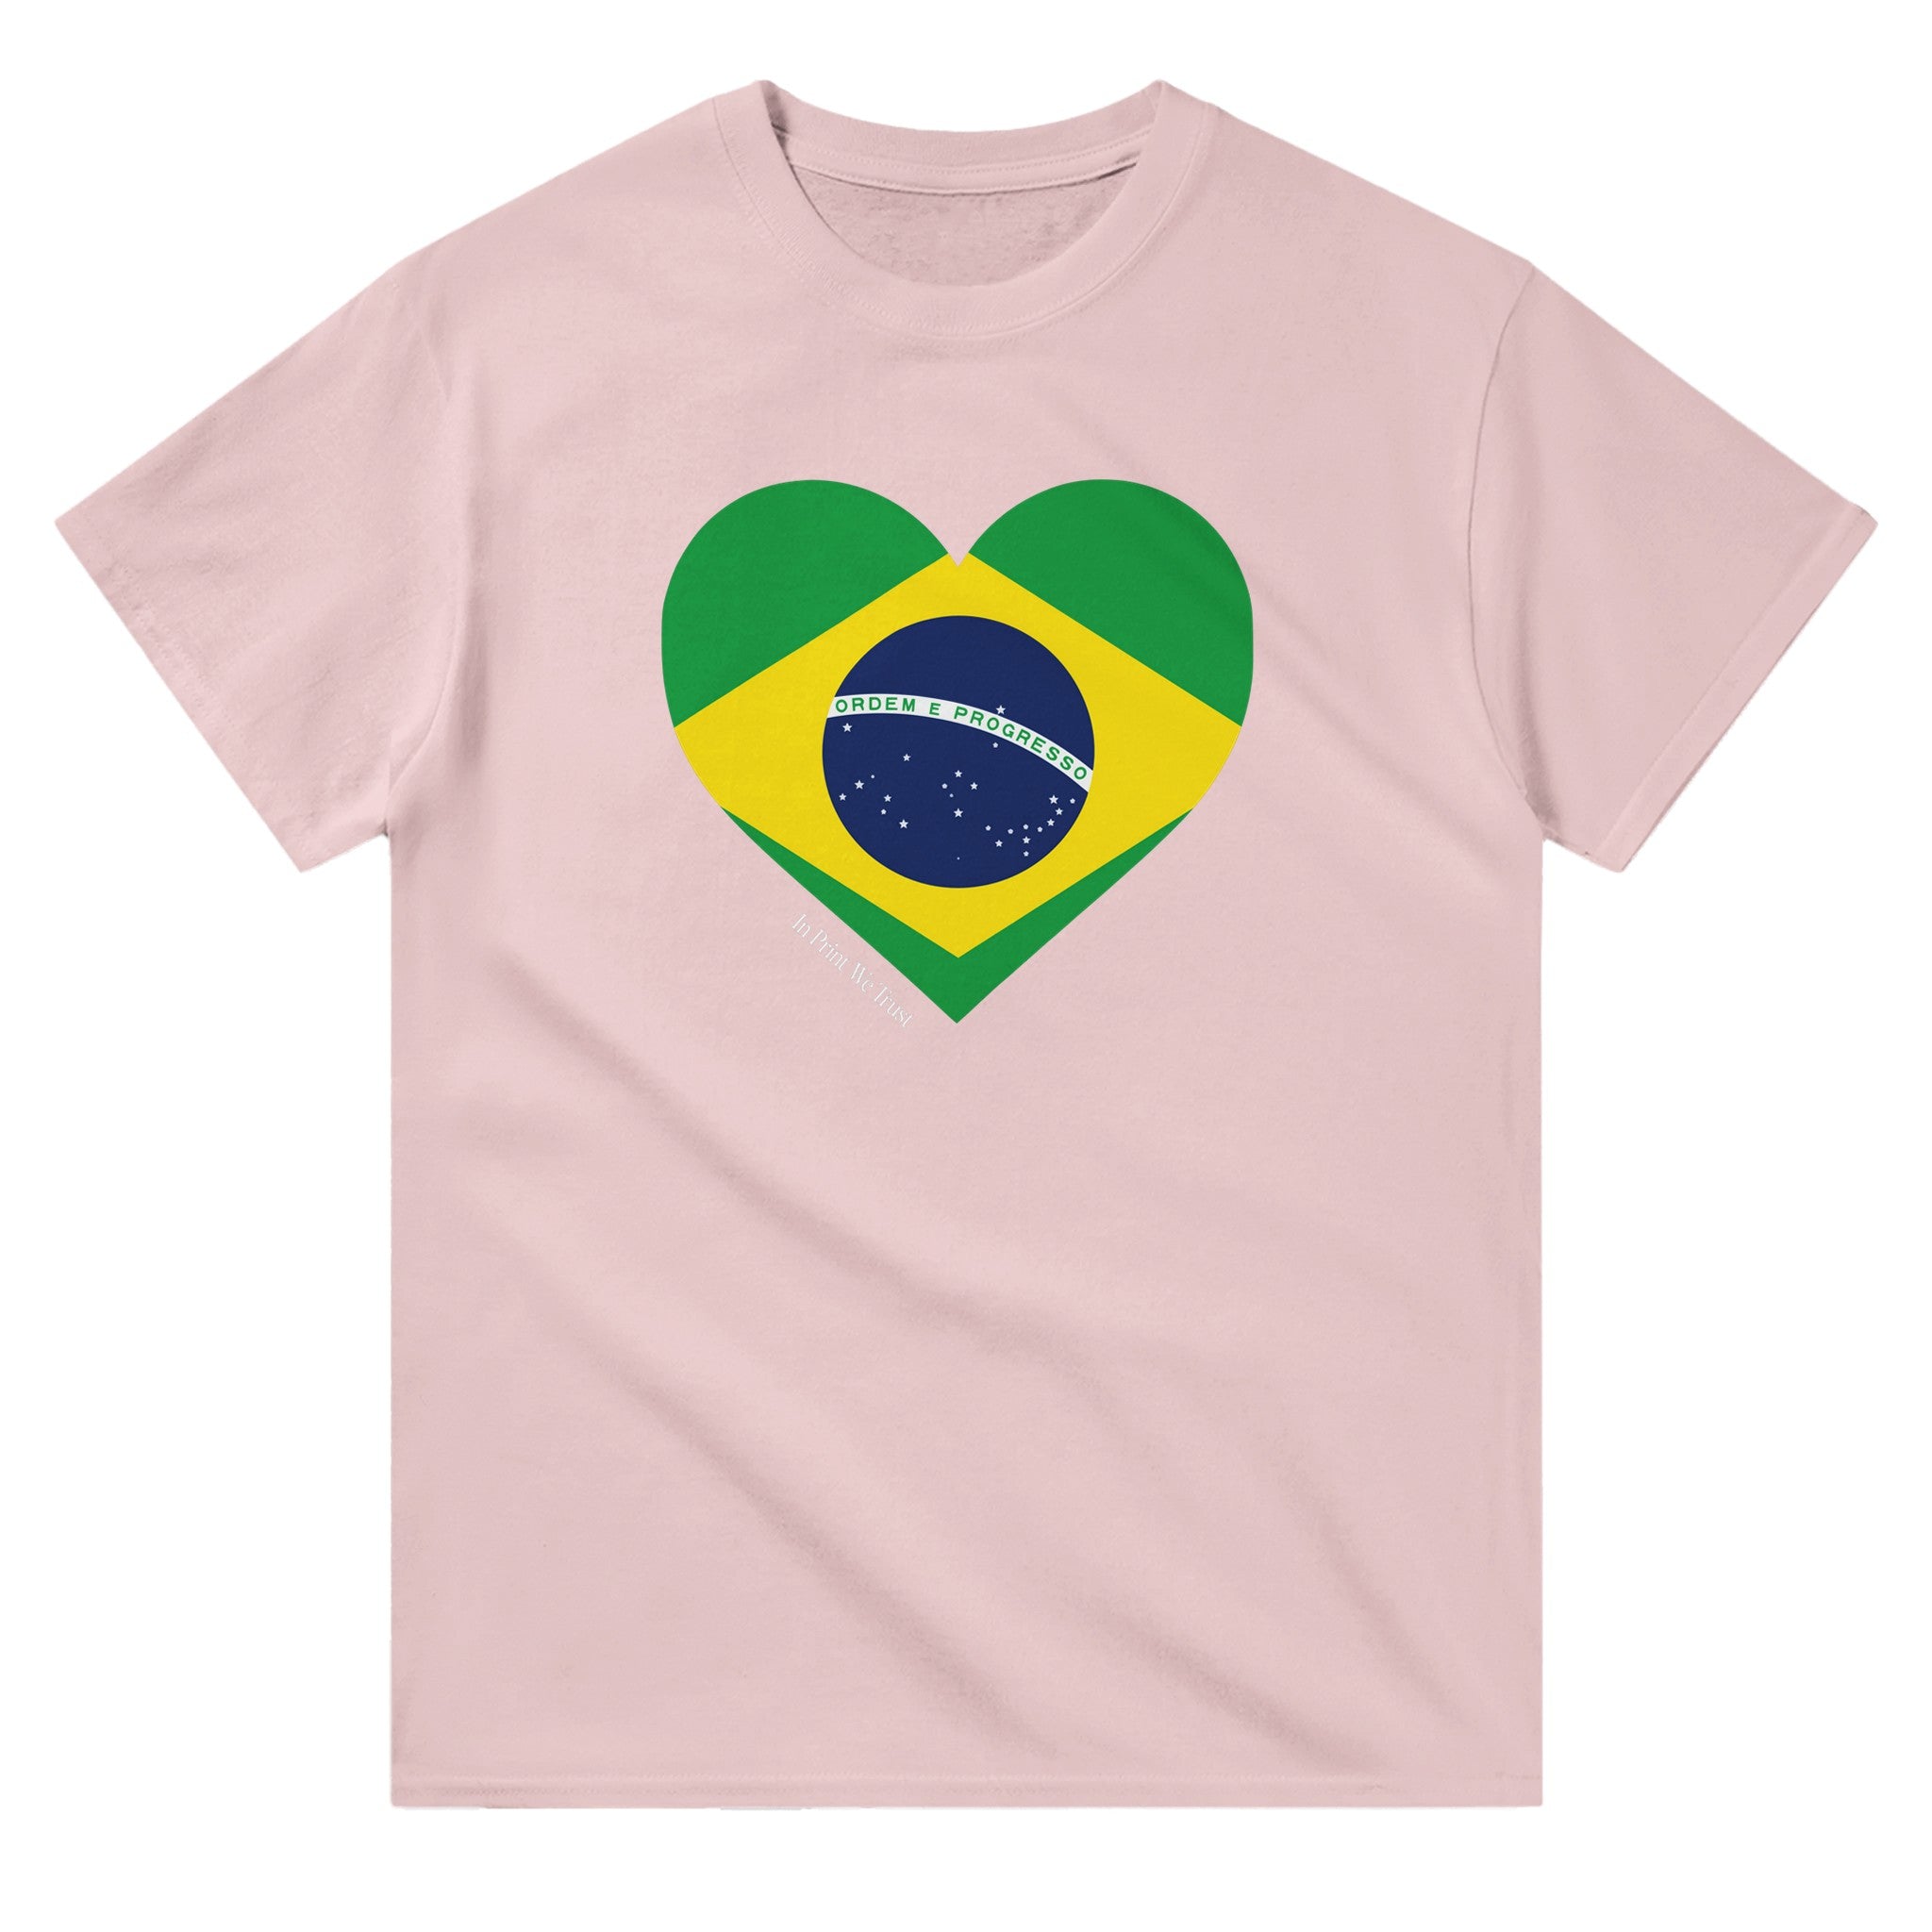 'Brazil' classic tee - In Print We Trust